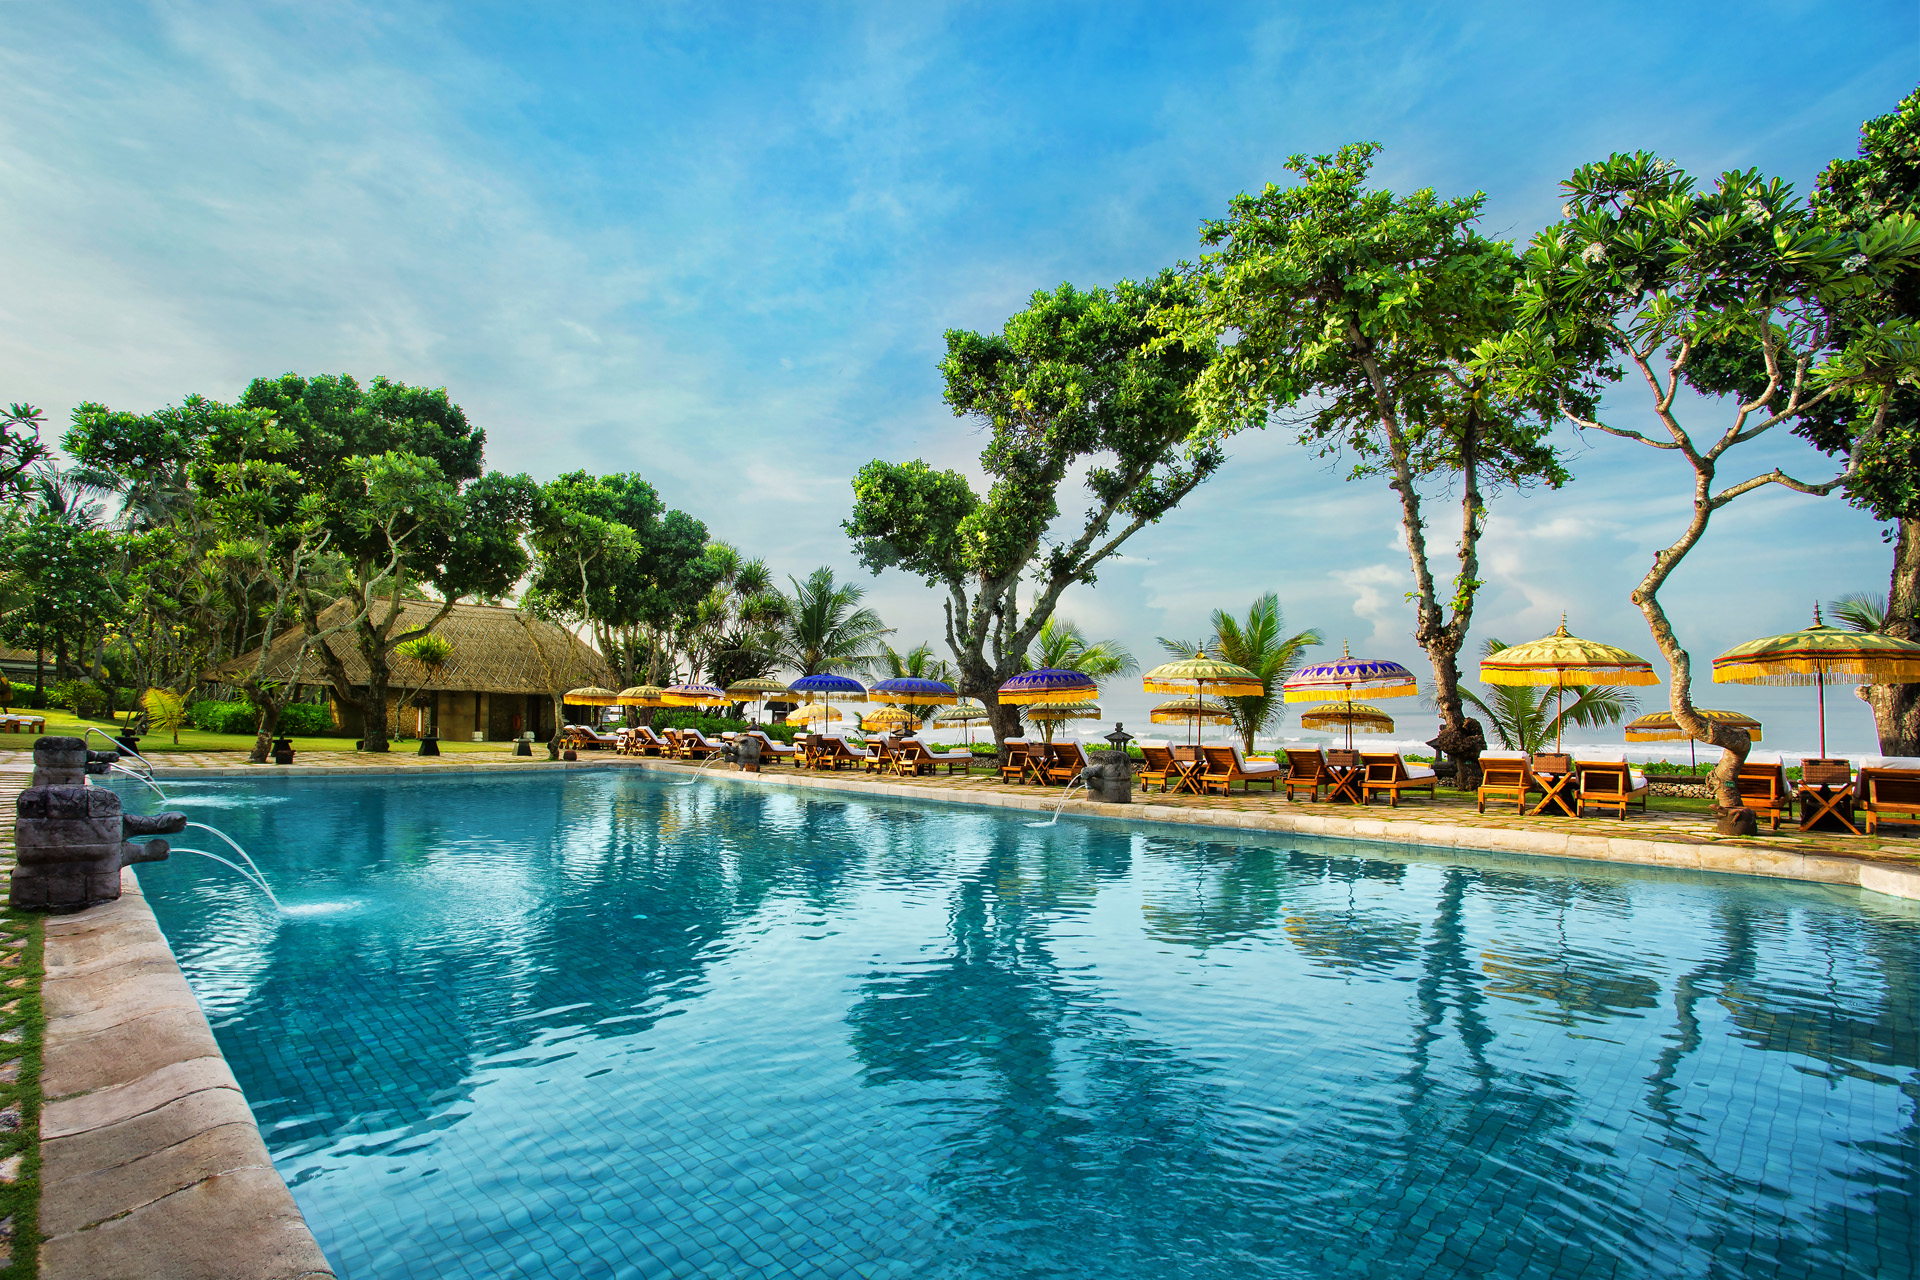 Bali Main Pool at The Oberoi